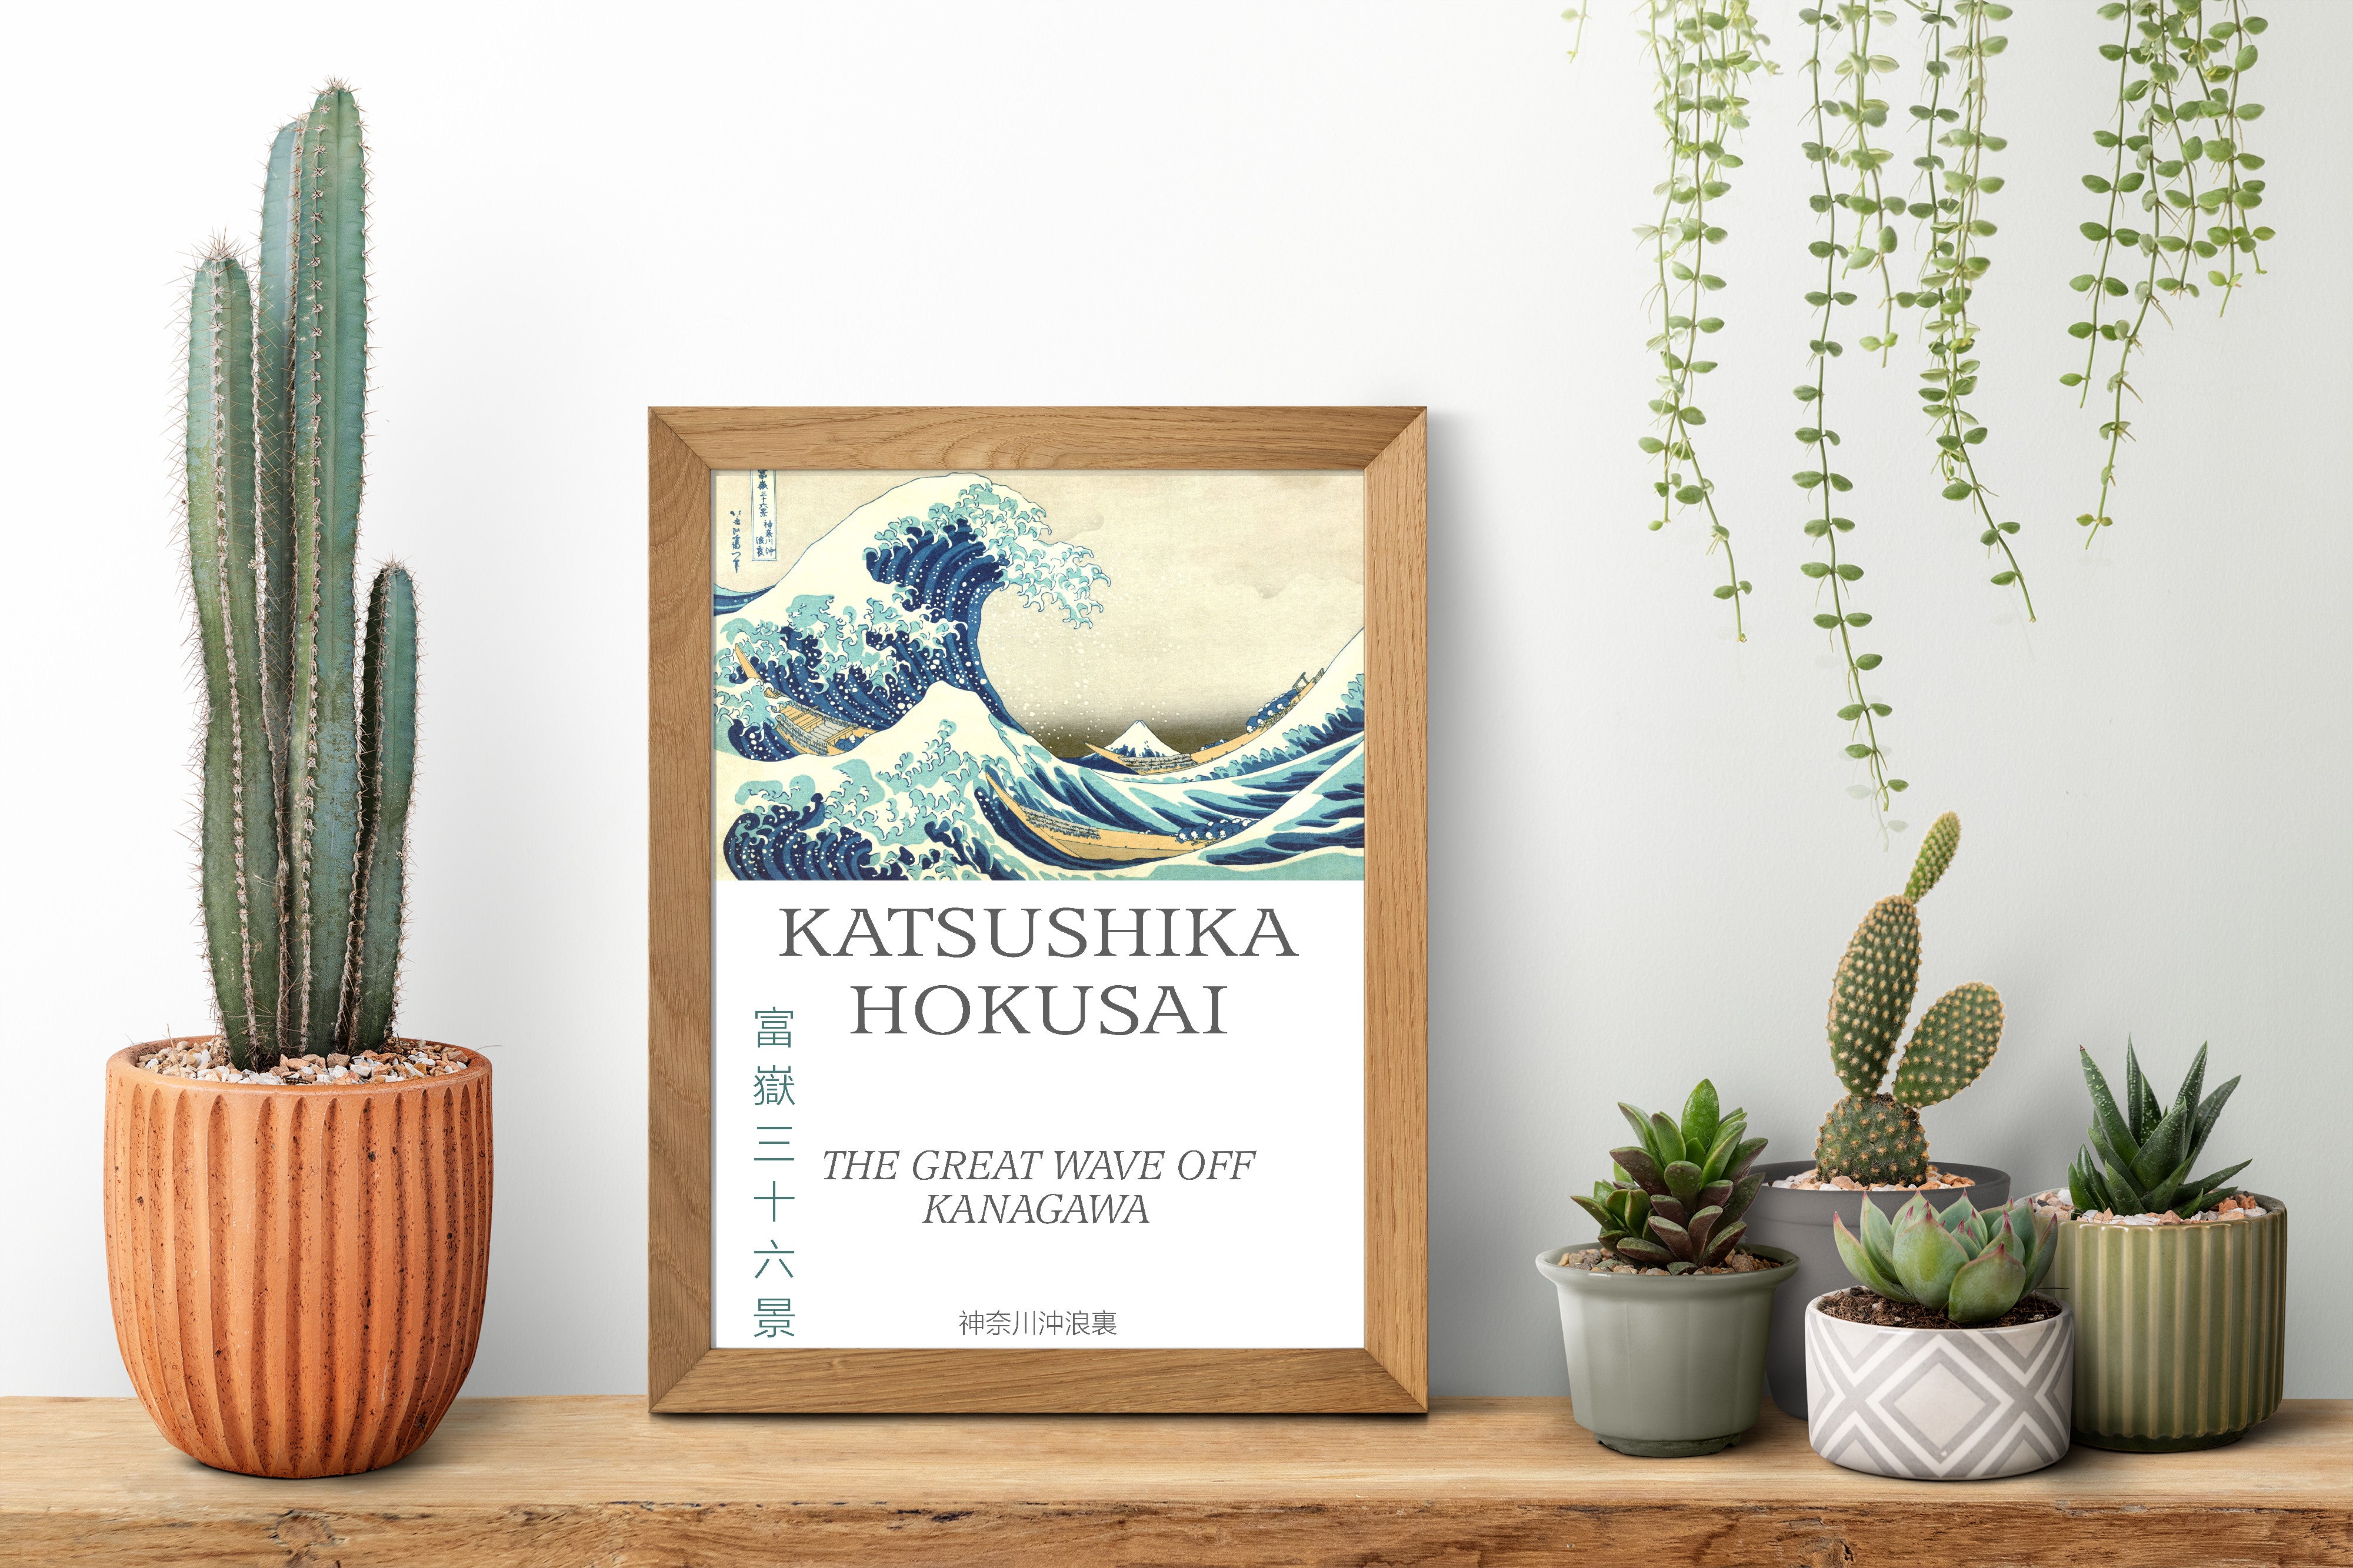 Katsushika Hokusai Exhibition Poster, The Great Wave off Kanagawa